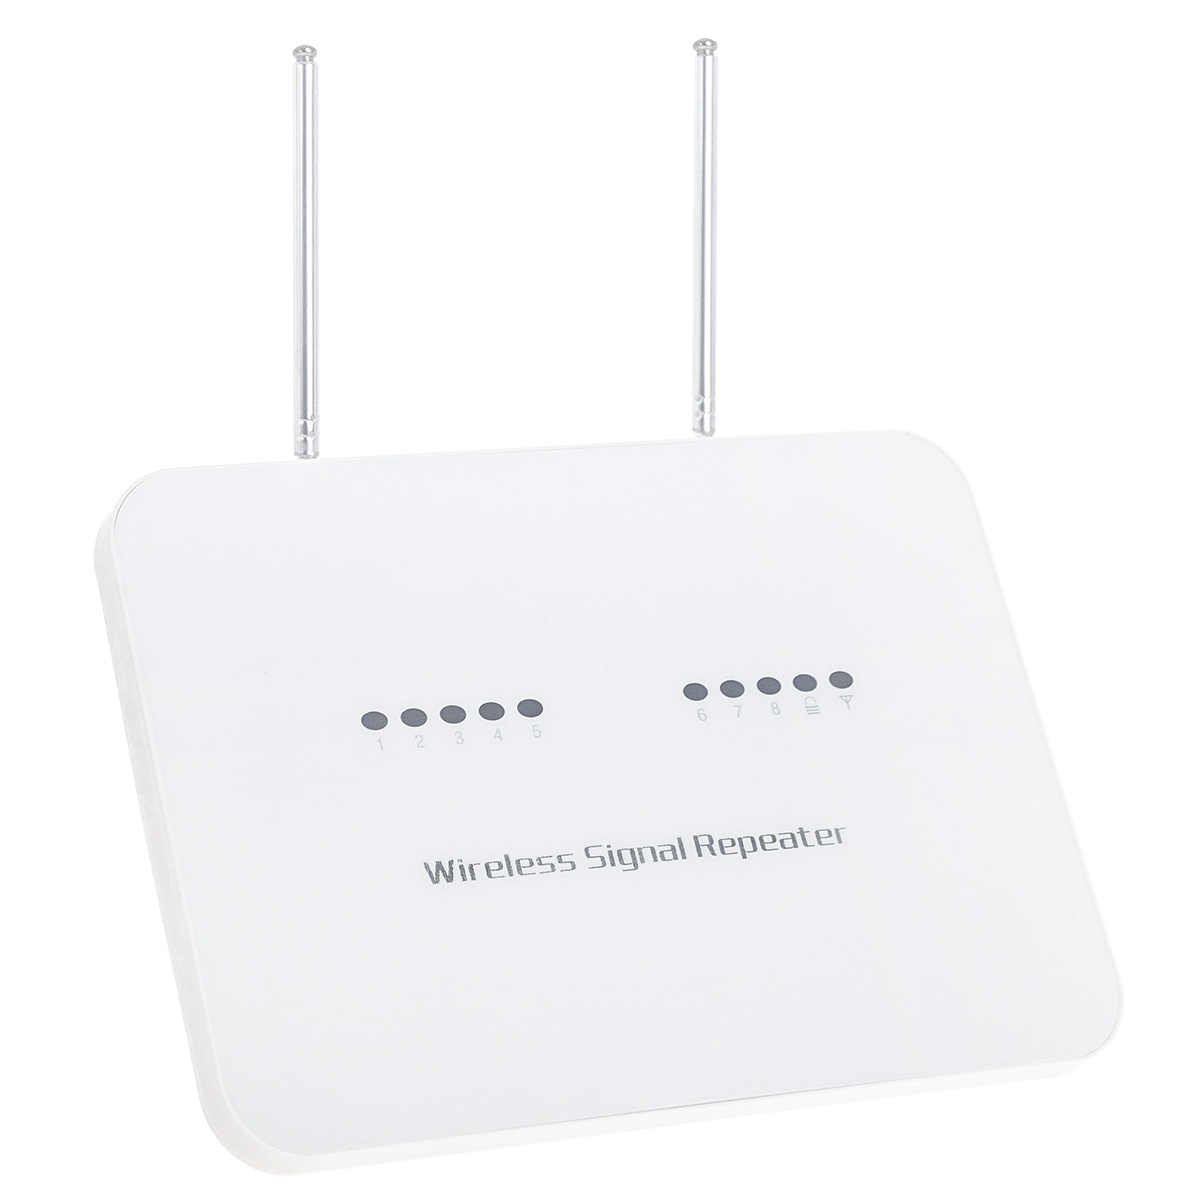 Повторитель сигнала CARCAM Wireless Signal Repeater RPT-01 comfast cf wr302s wireless router repeater 300m 10dbi antenna wifi signal repeater eu